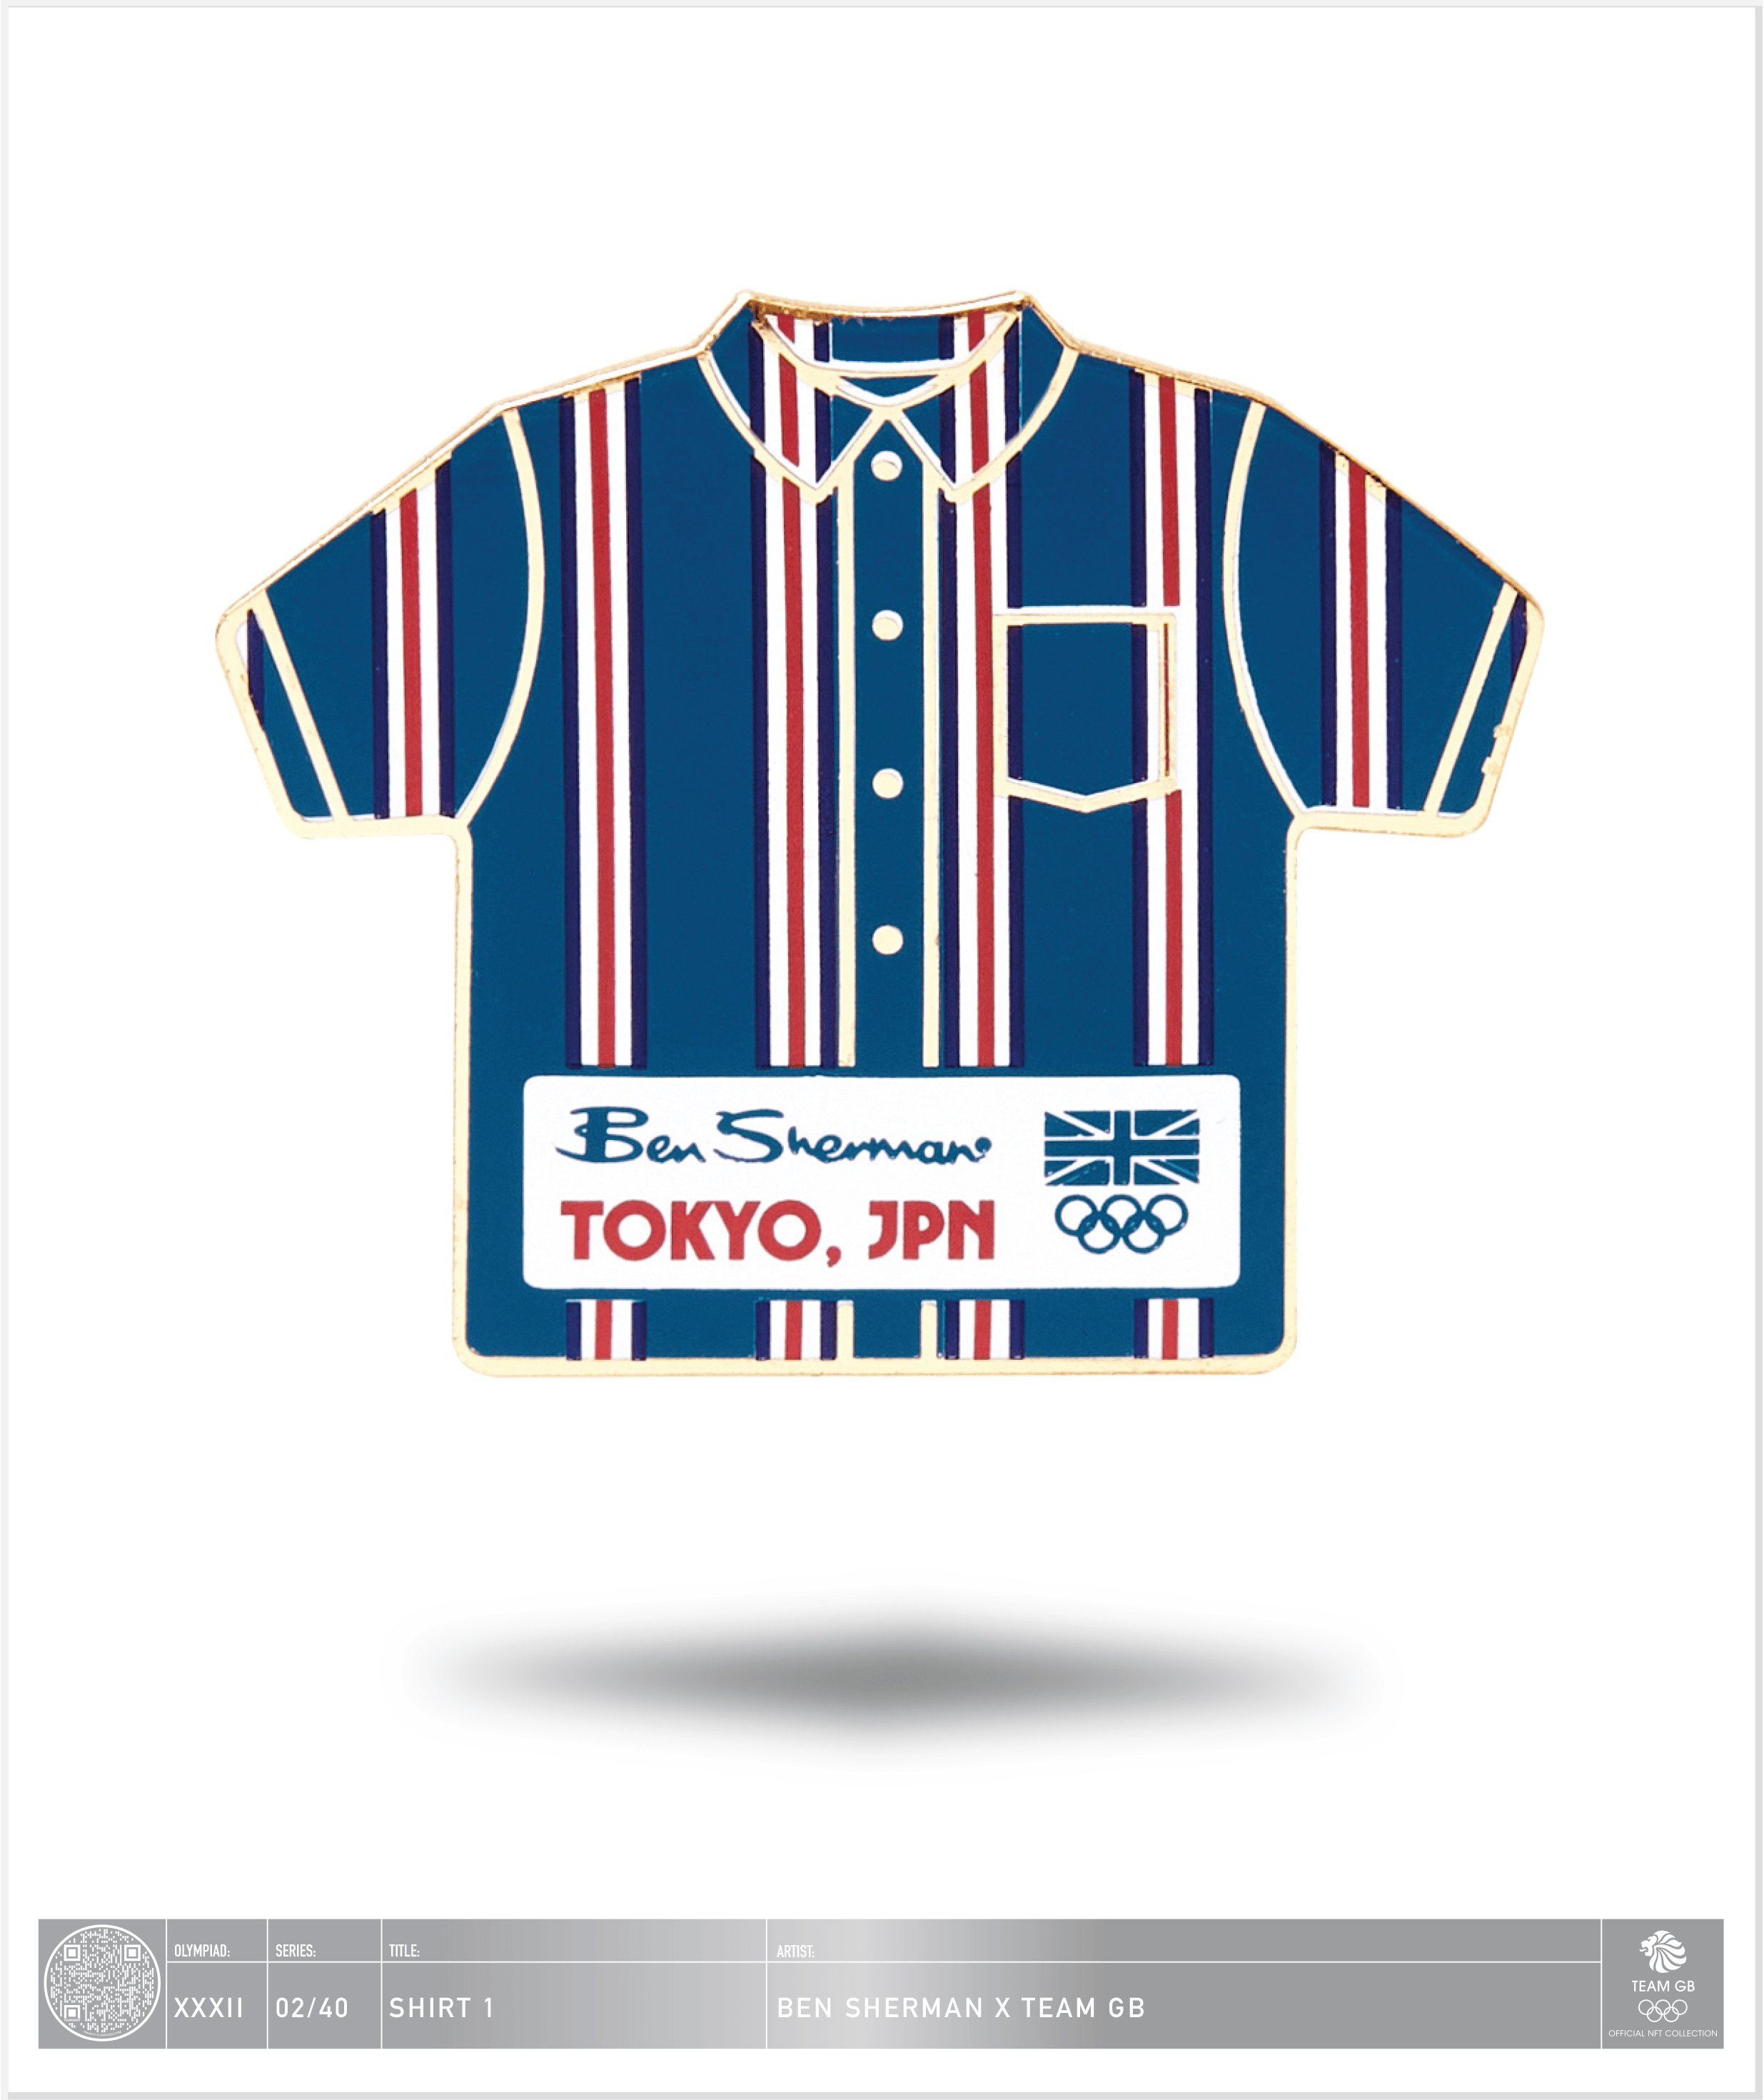 Ben Sherman Tokyo - Shirt 1 - 2 / 40